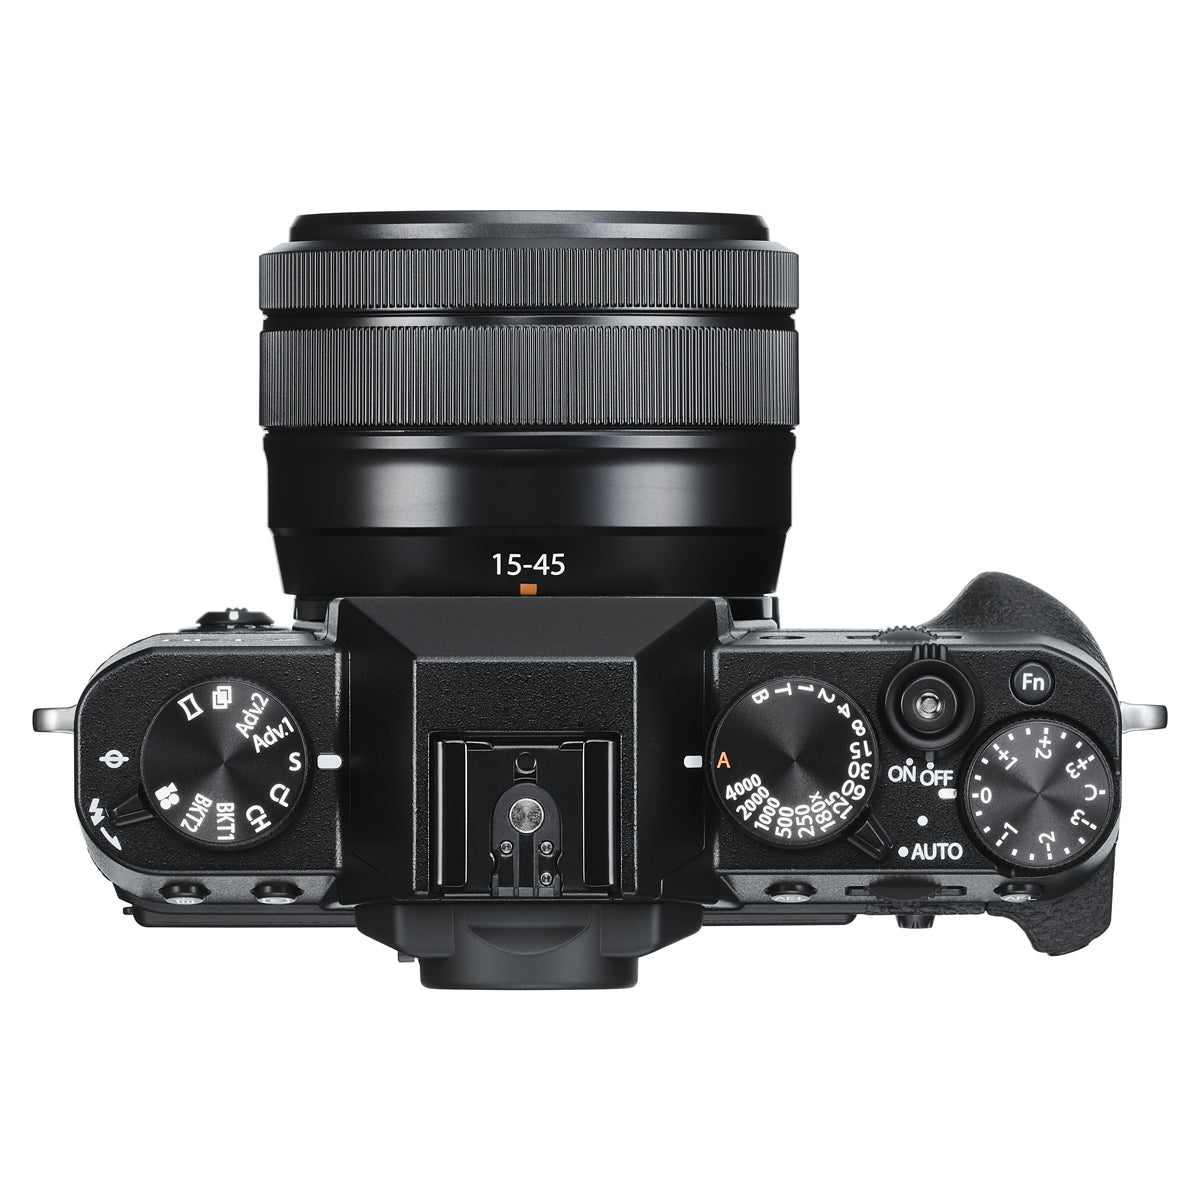 Fujifilm X-T30 Mirrorless Body with XC 15-45mm PZ Lens Kit (Black)